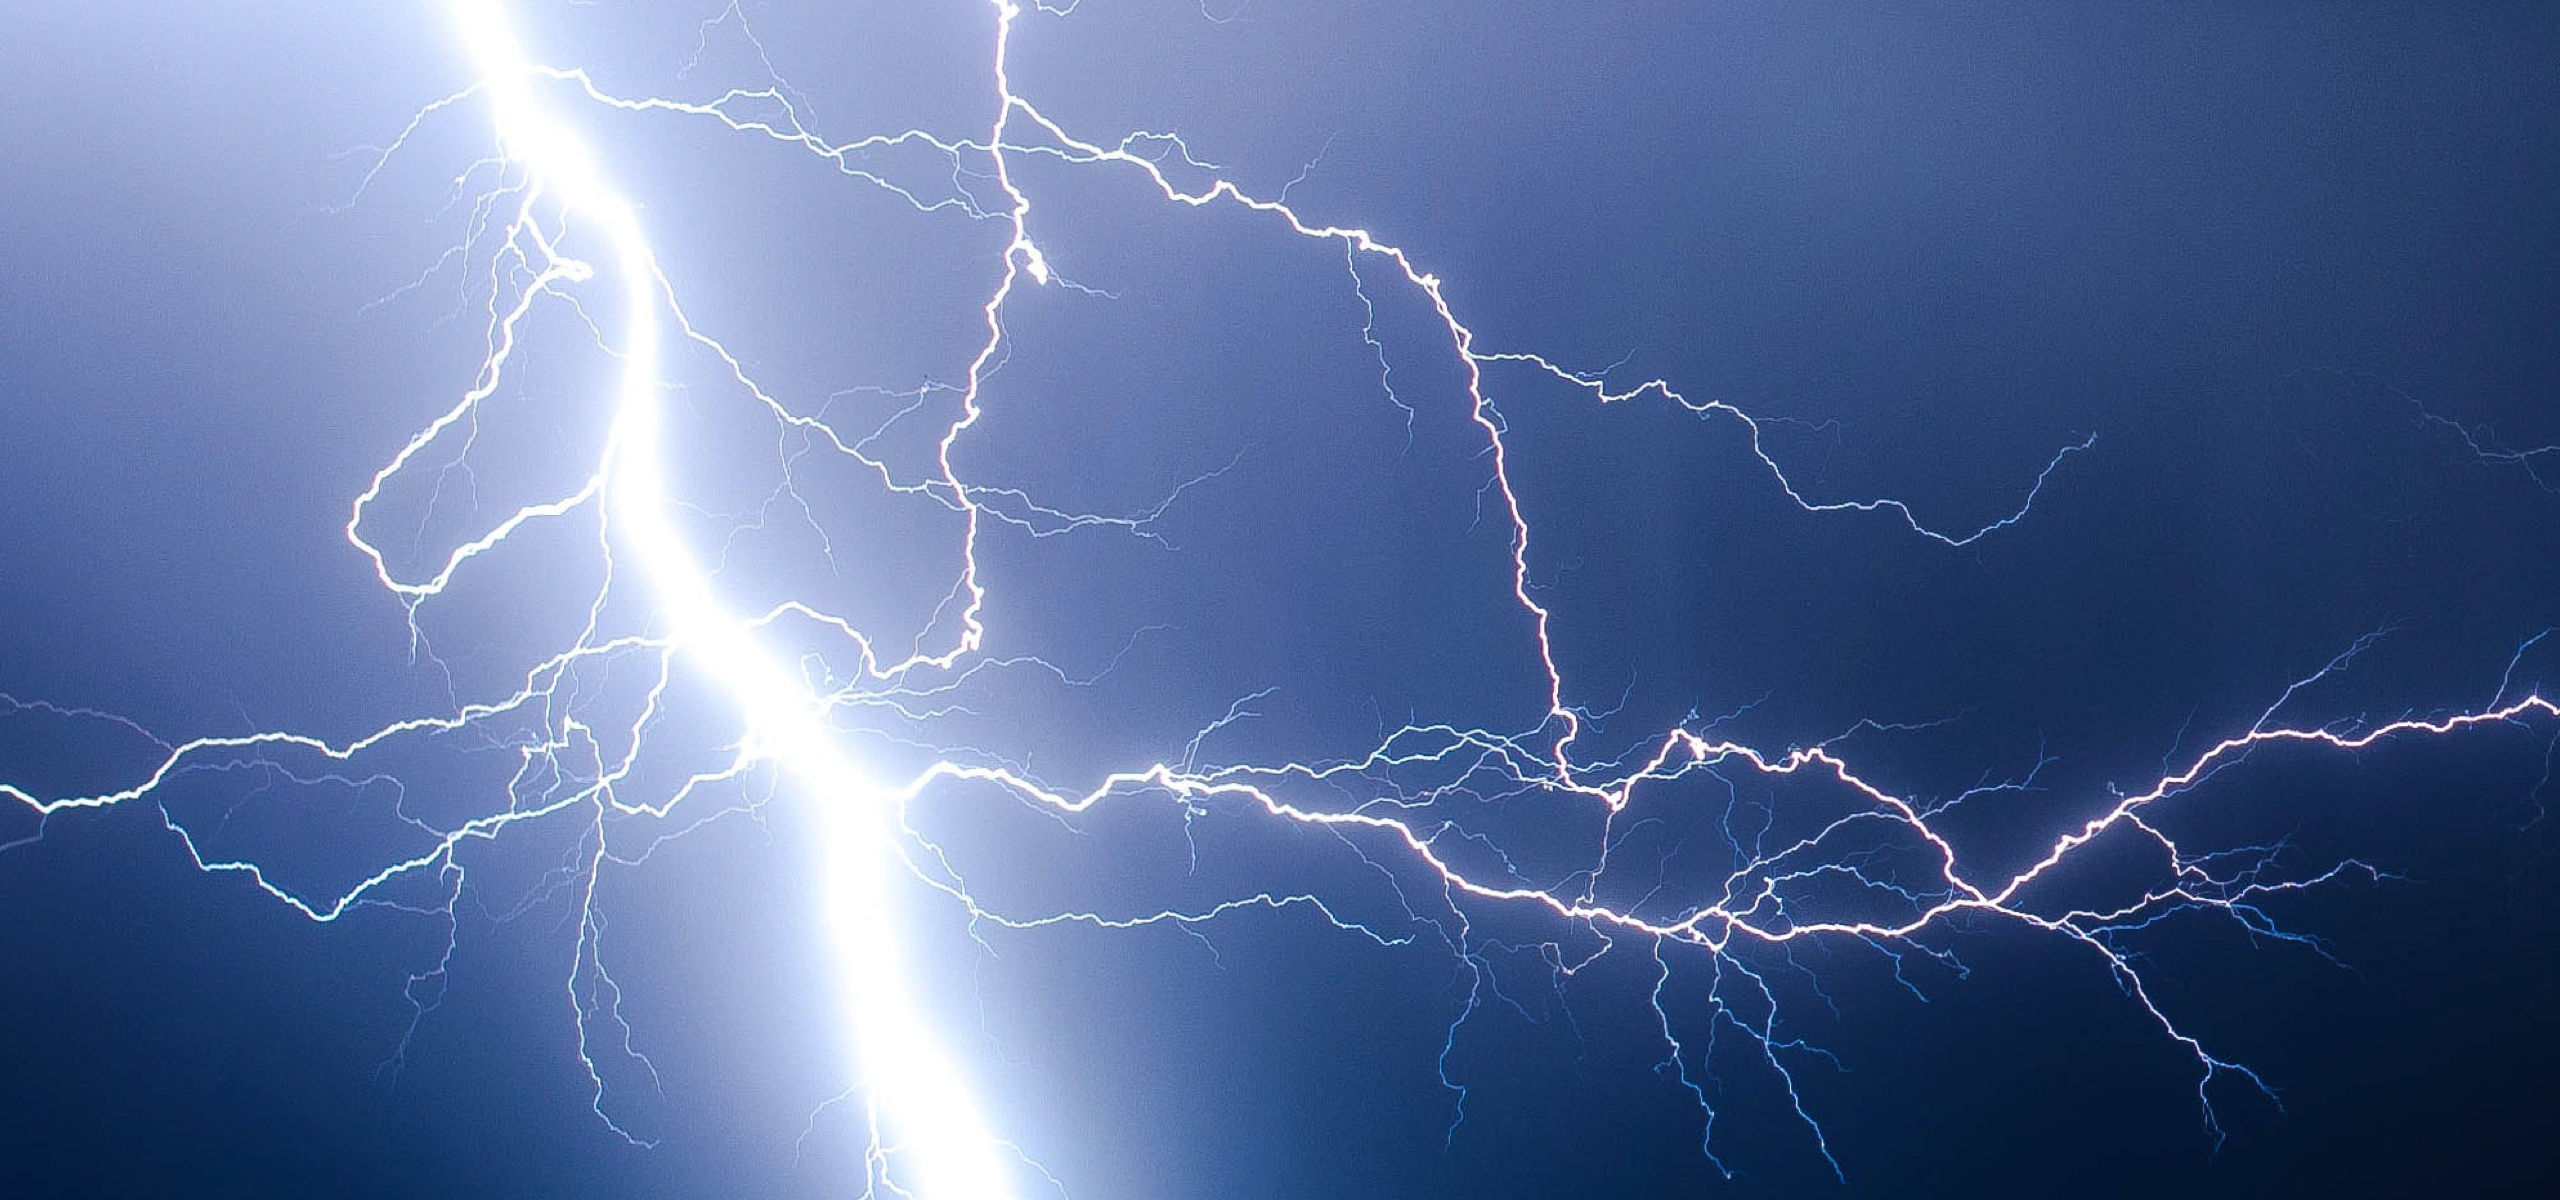 lightning strike during catastrophic storm